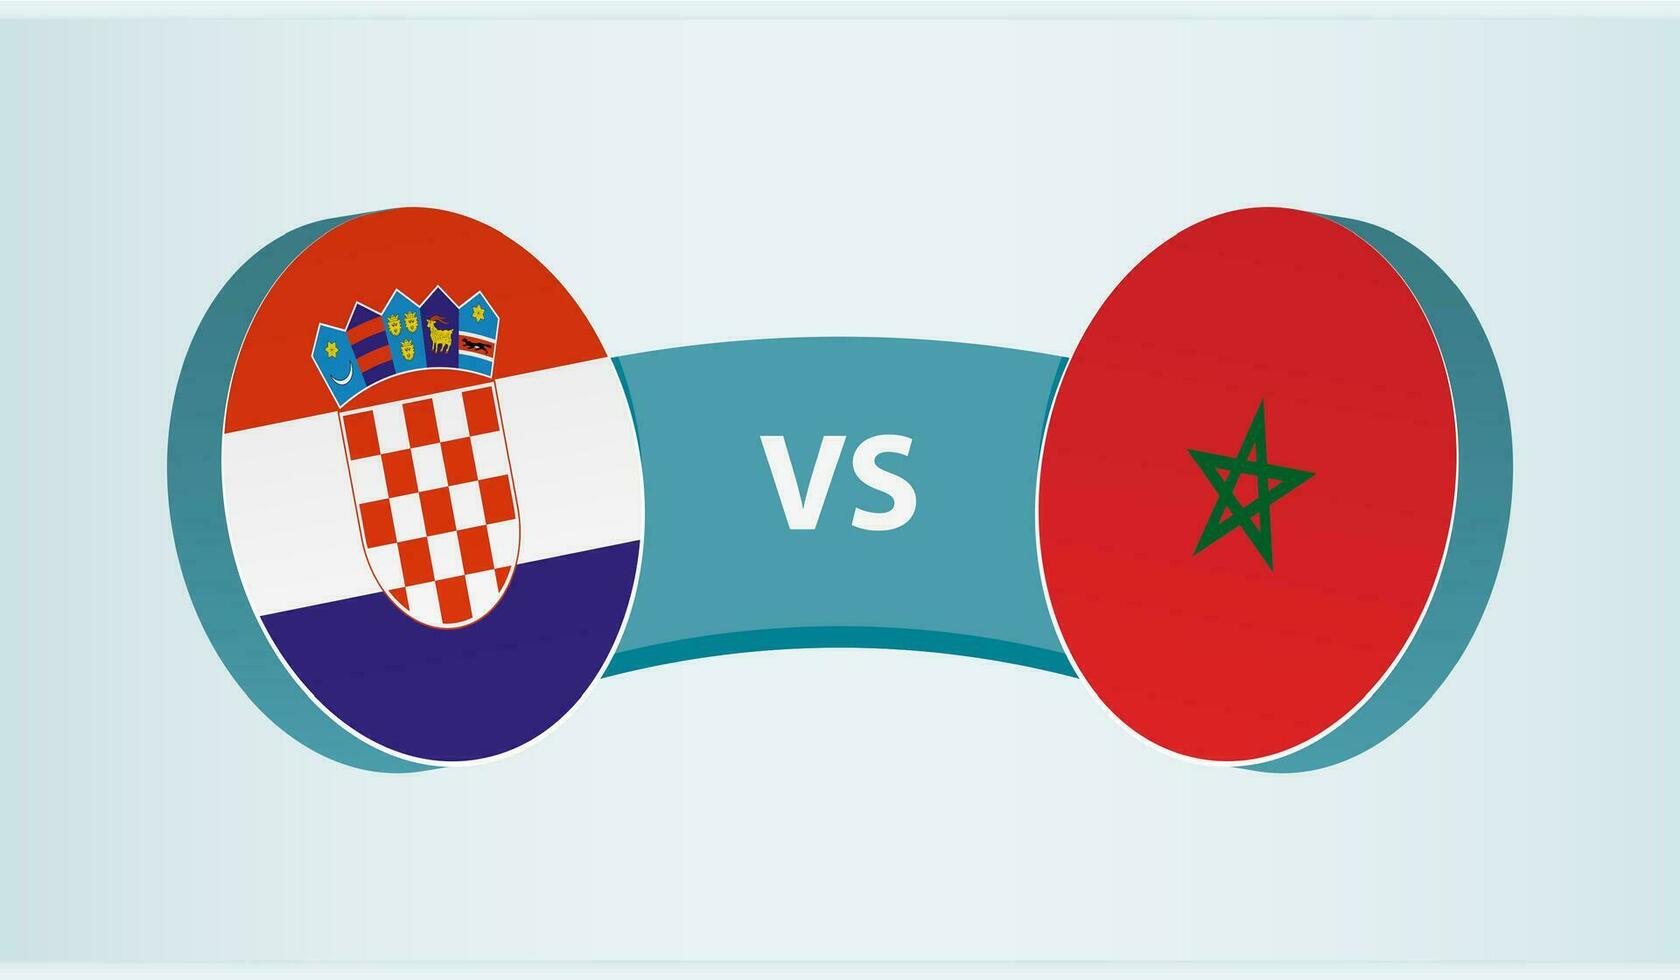 kroatien mot marocko, team sporter konkurrens begrepp. vektor